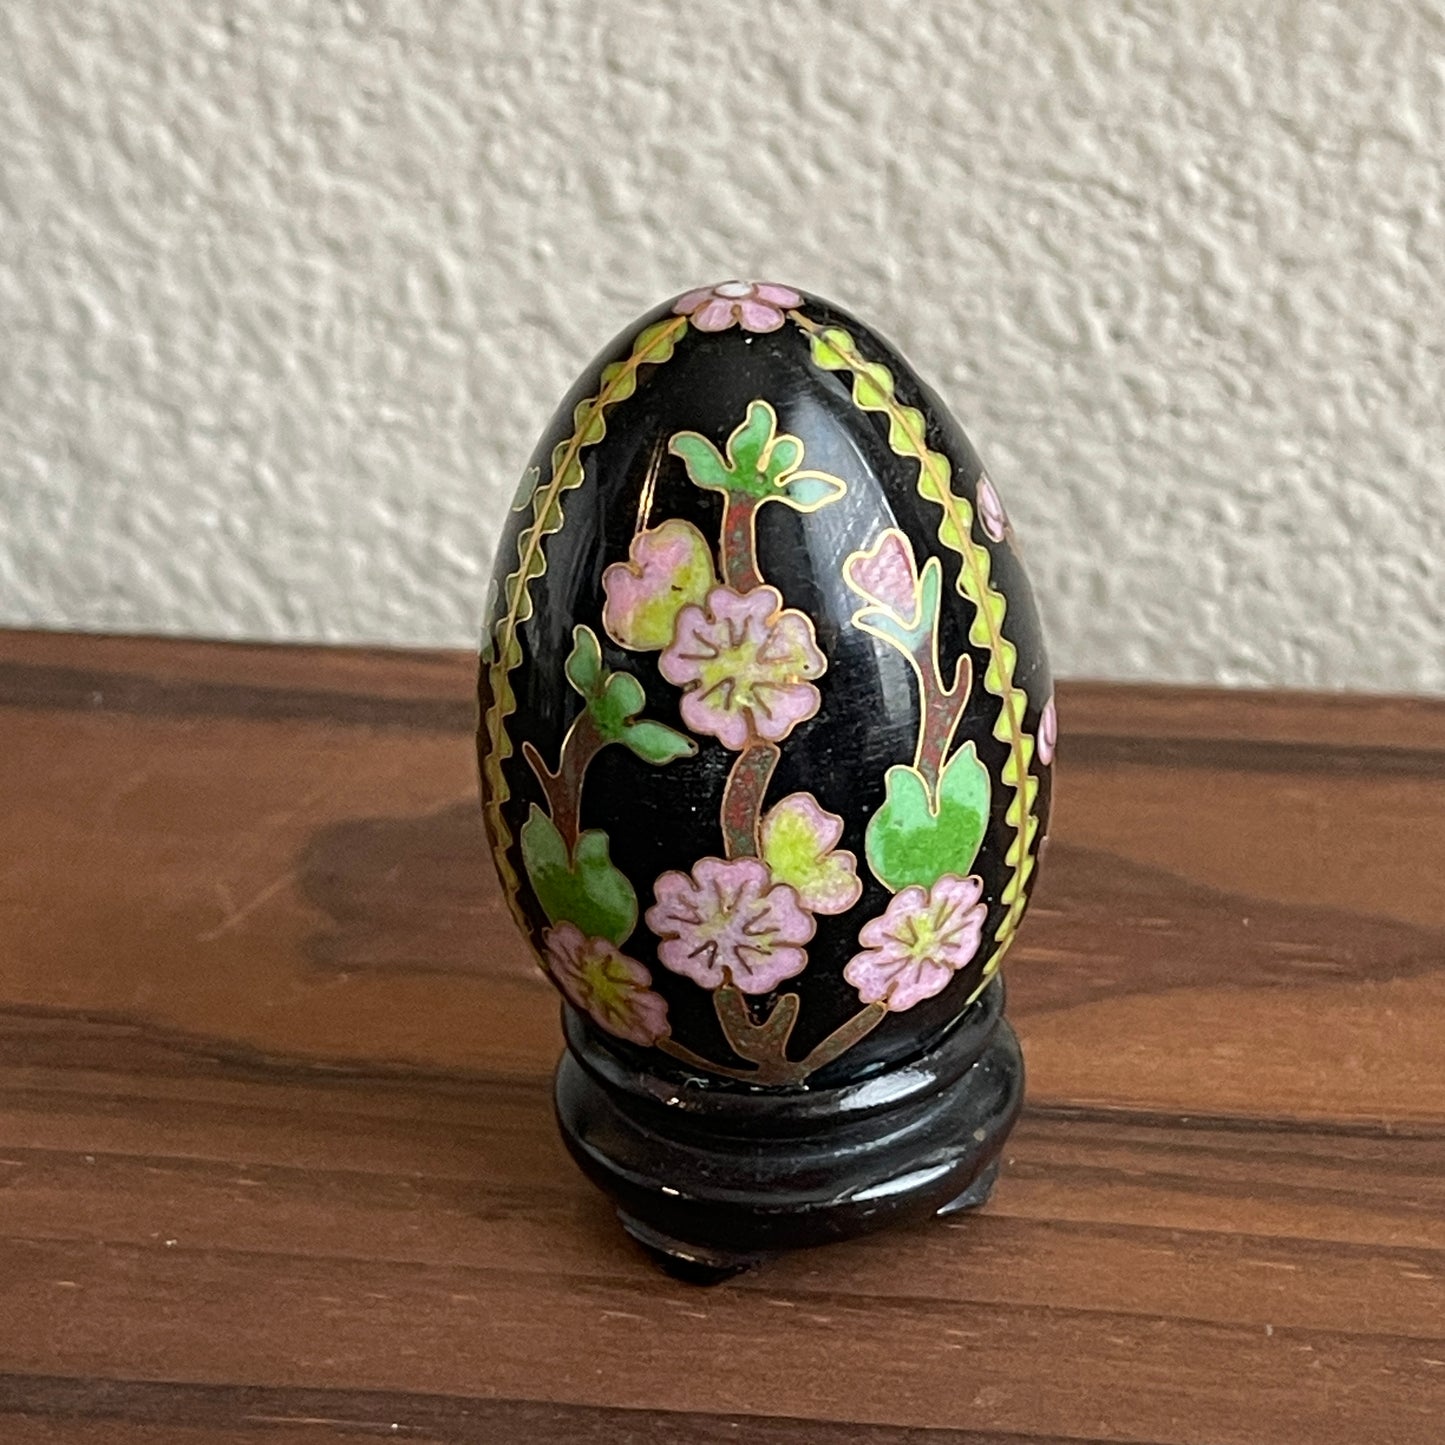 Vintage Cloisonné floral design Chinese ceramic egg